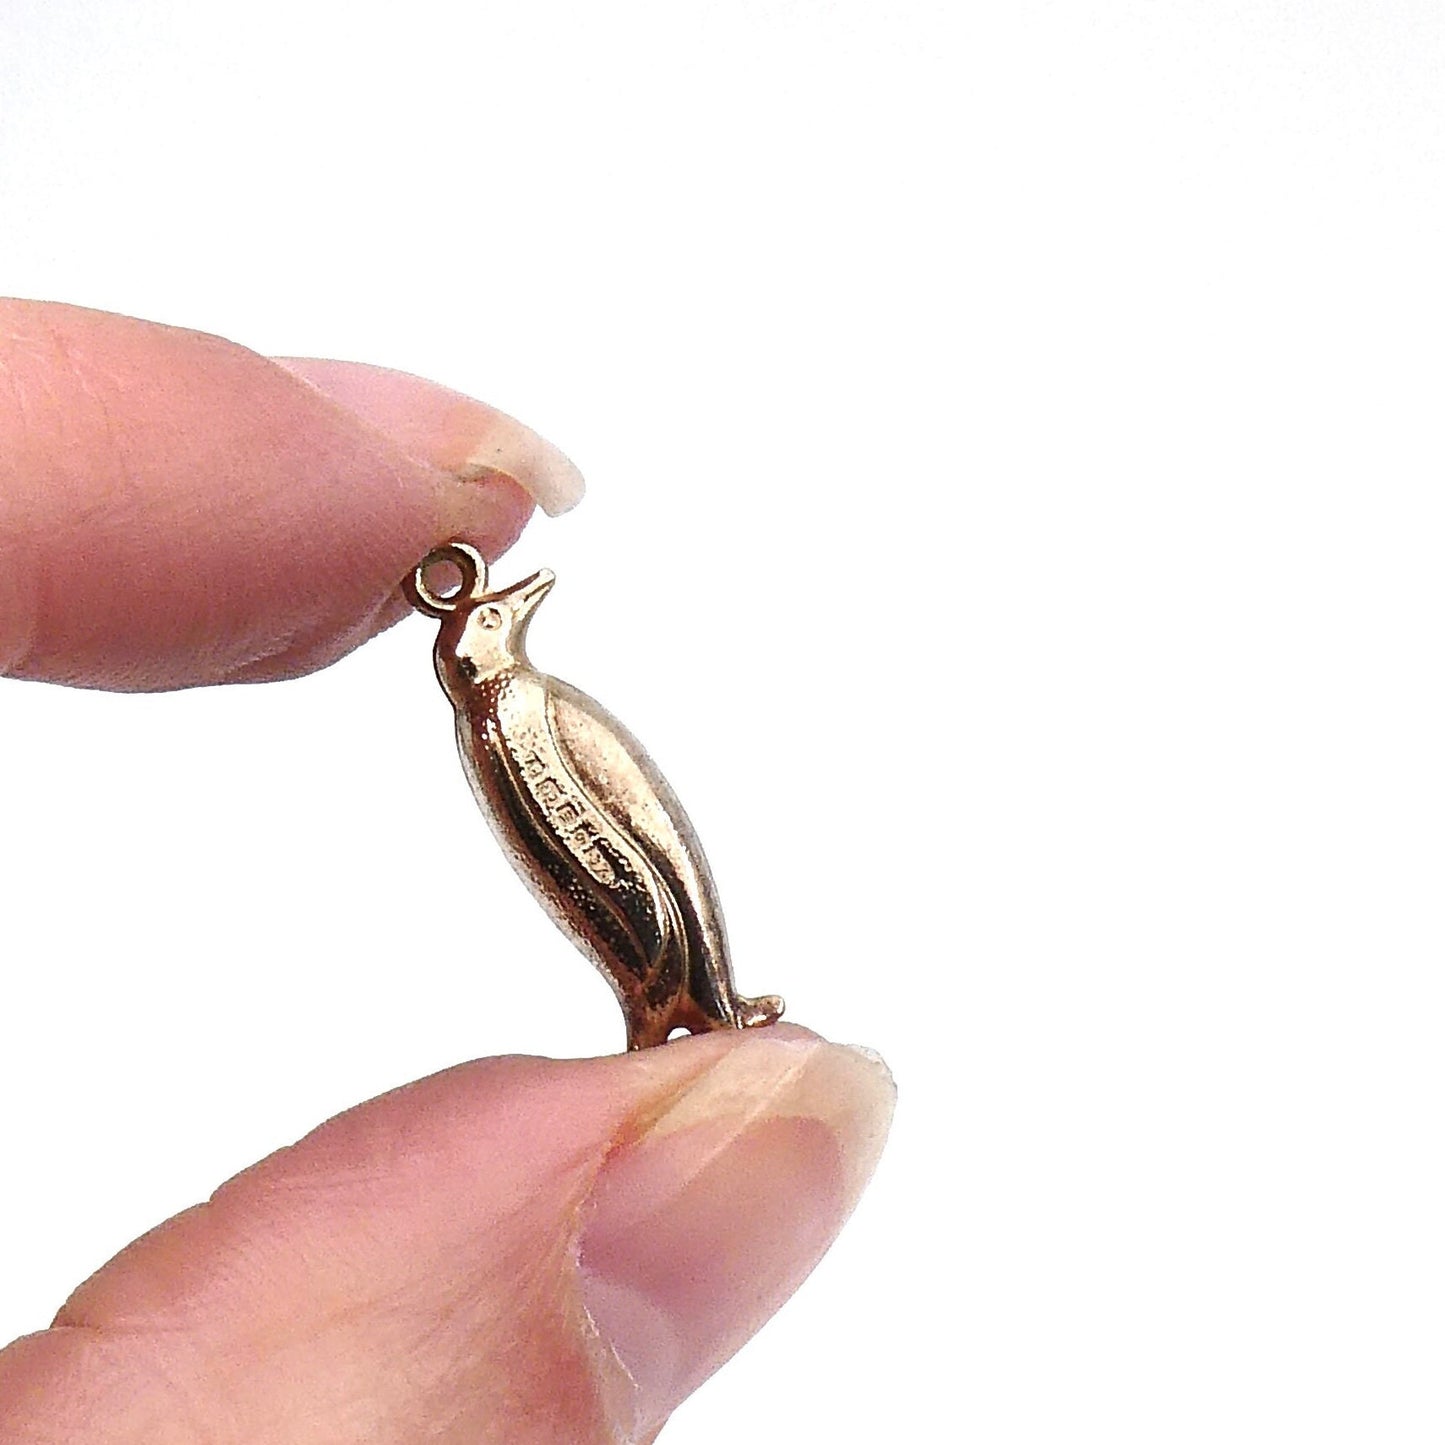 Vintage gold penguin pendant, a quirky vintage piece on a chain.